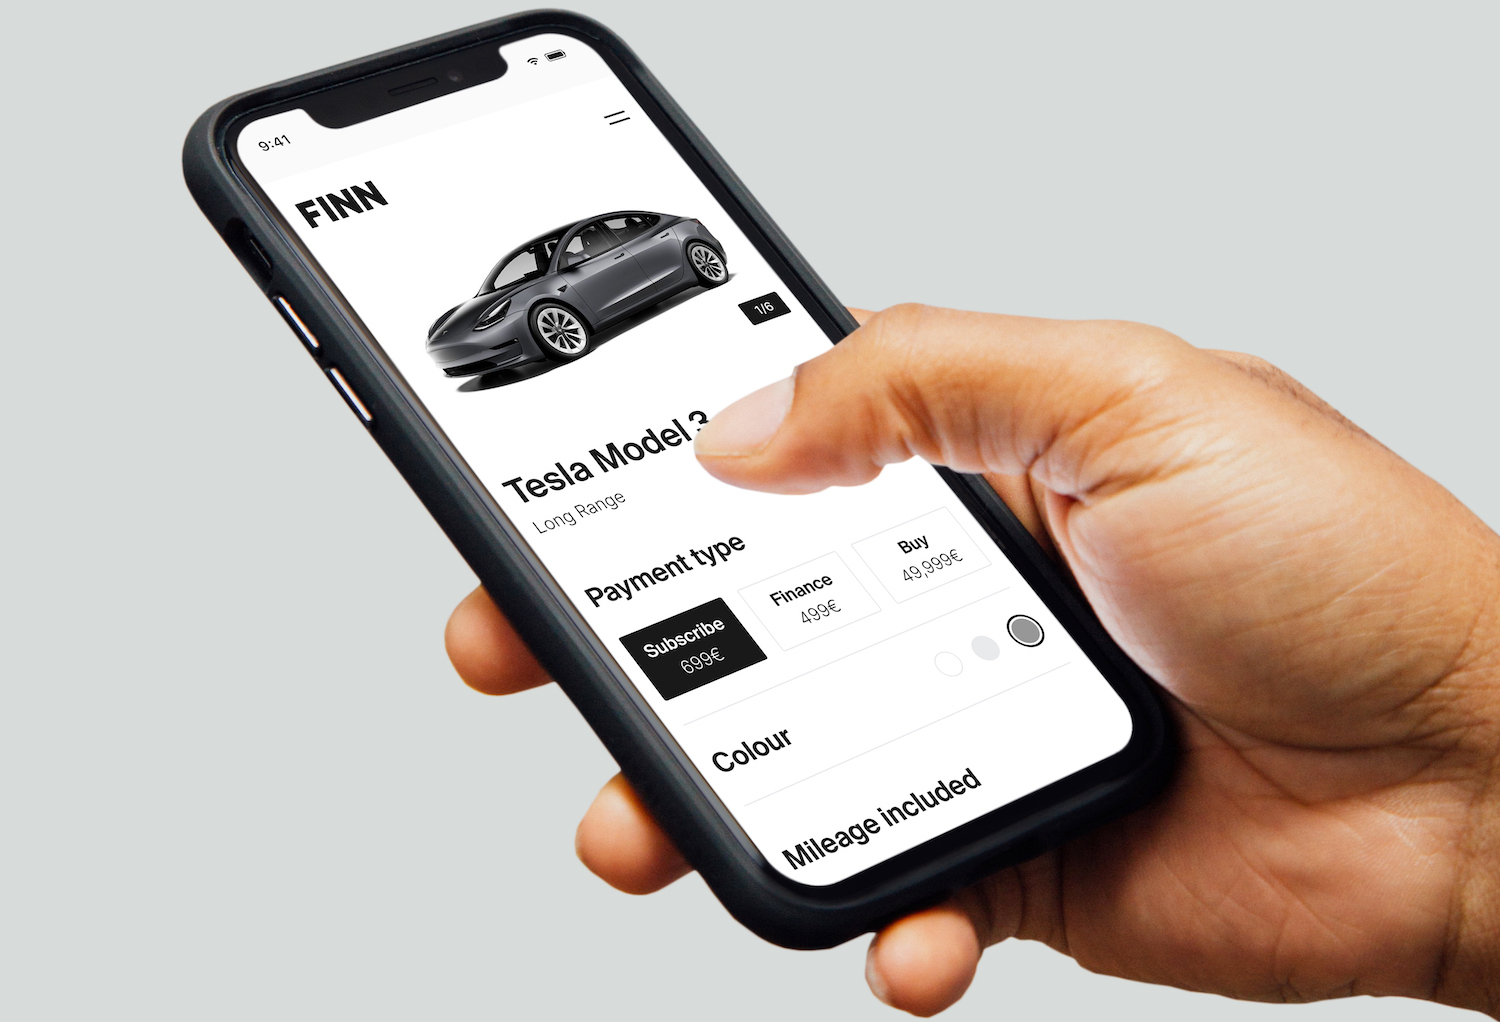 A user orders a Tesla on the FINN app.